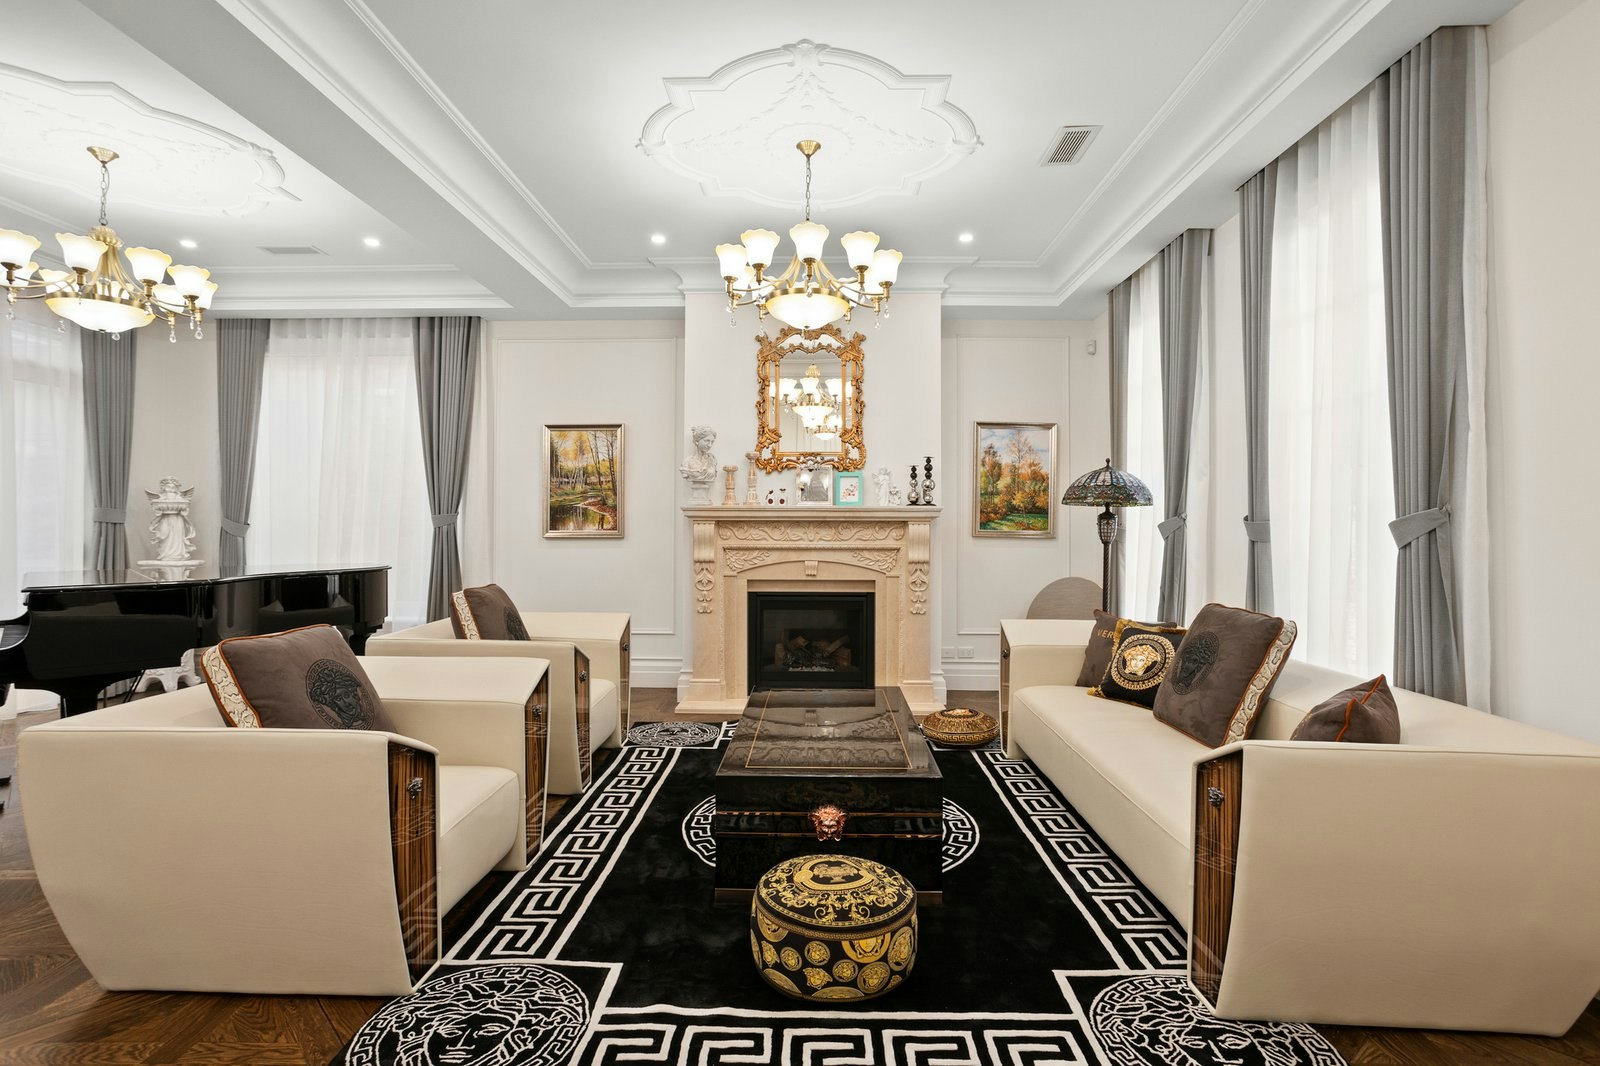 Image of home decor